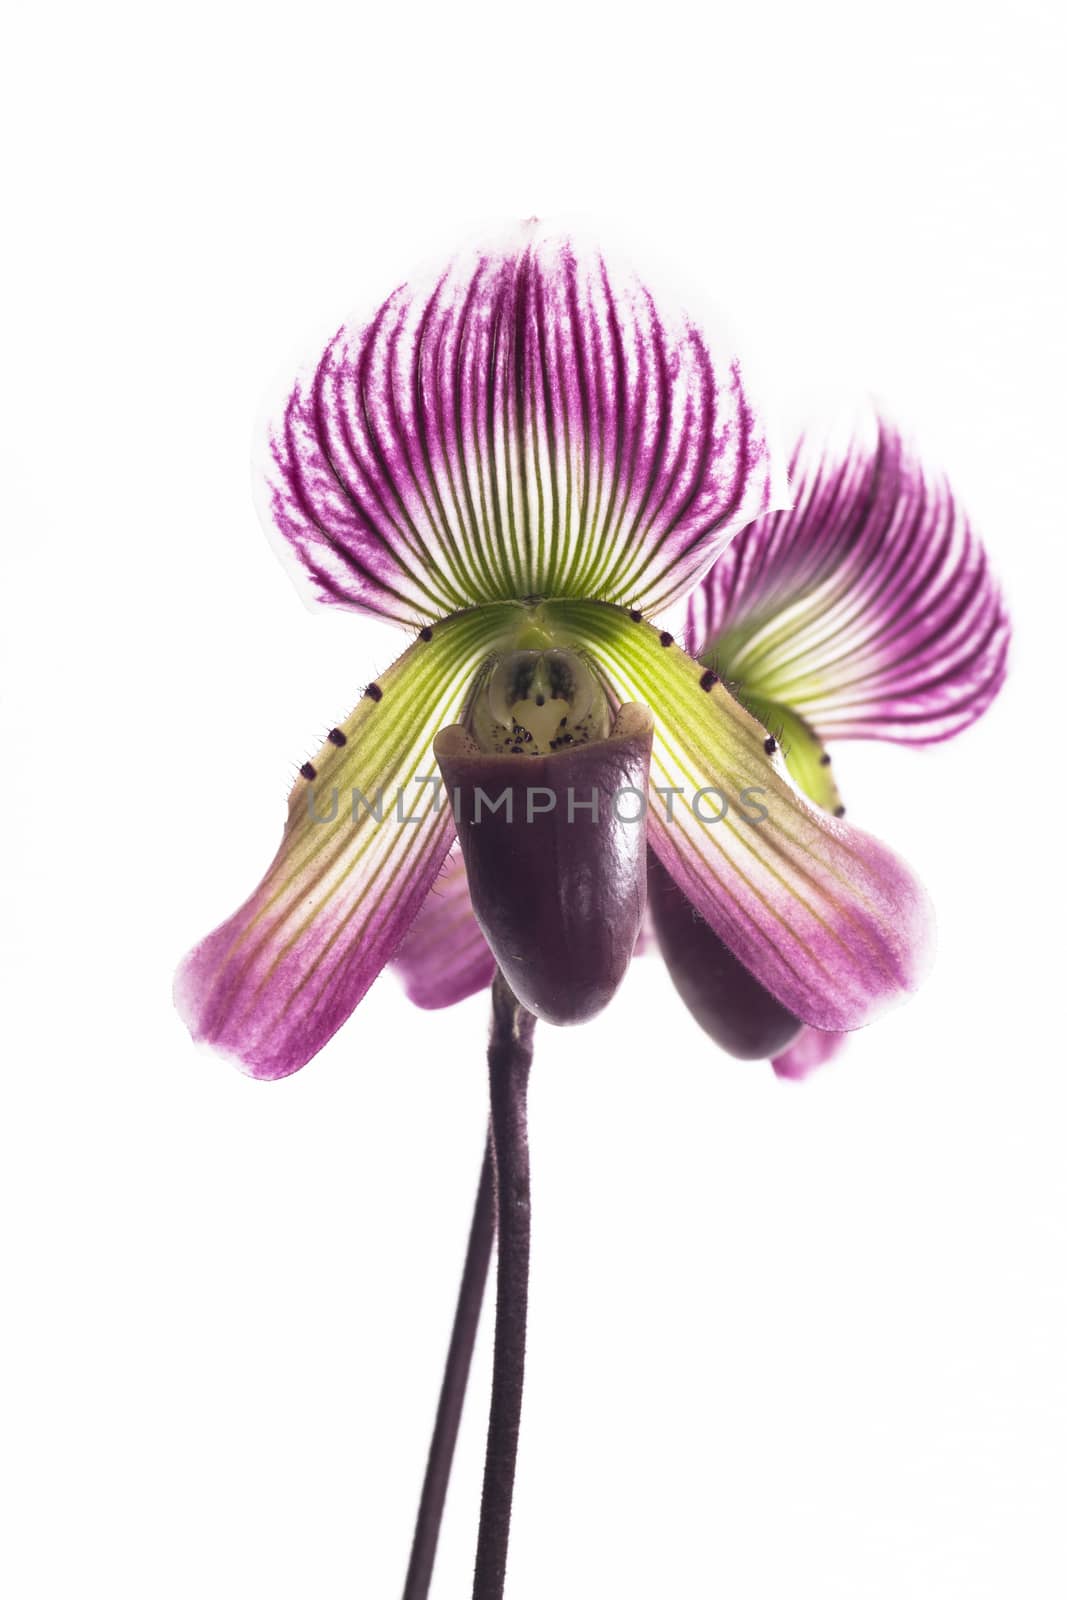 Paphiopedilum callosum is a species of orchid found from Vietnam to northwestern Peninsular Malaysia.